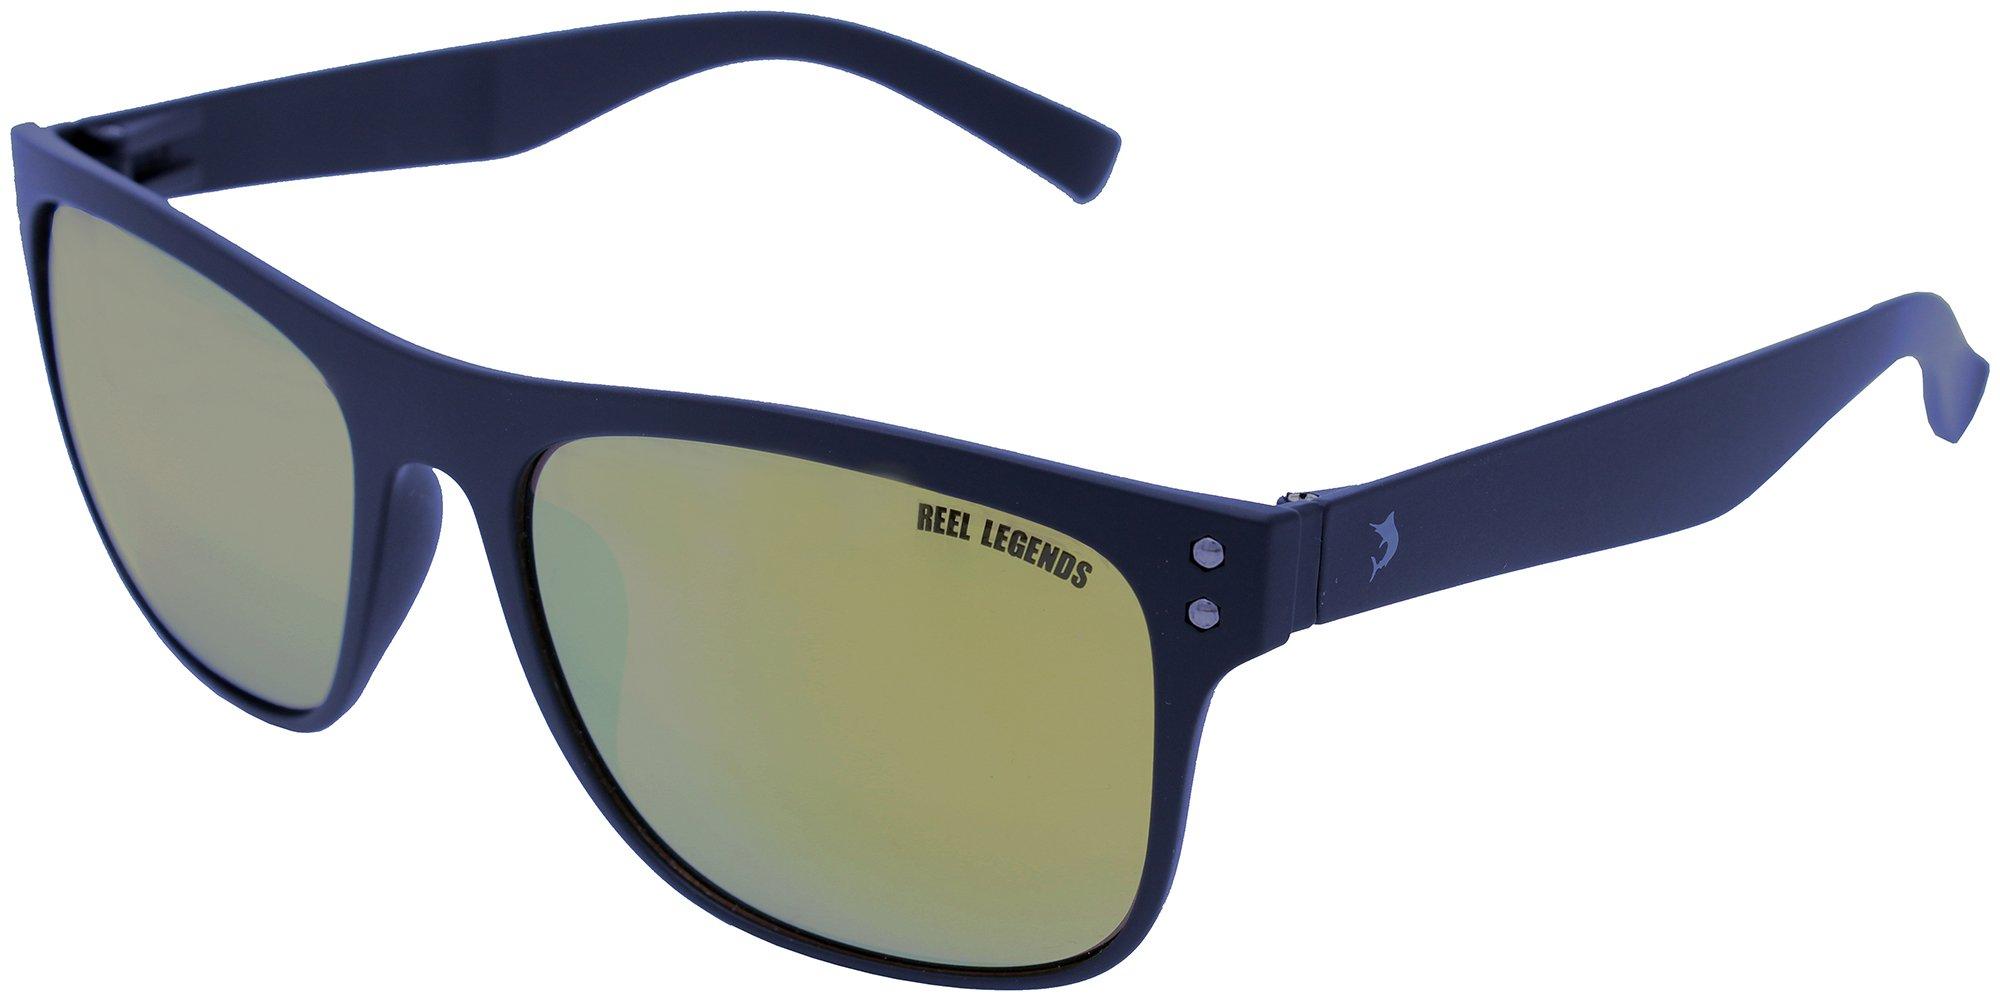 Reel Legends Mens Melbourne Classic Sunglasses